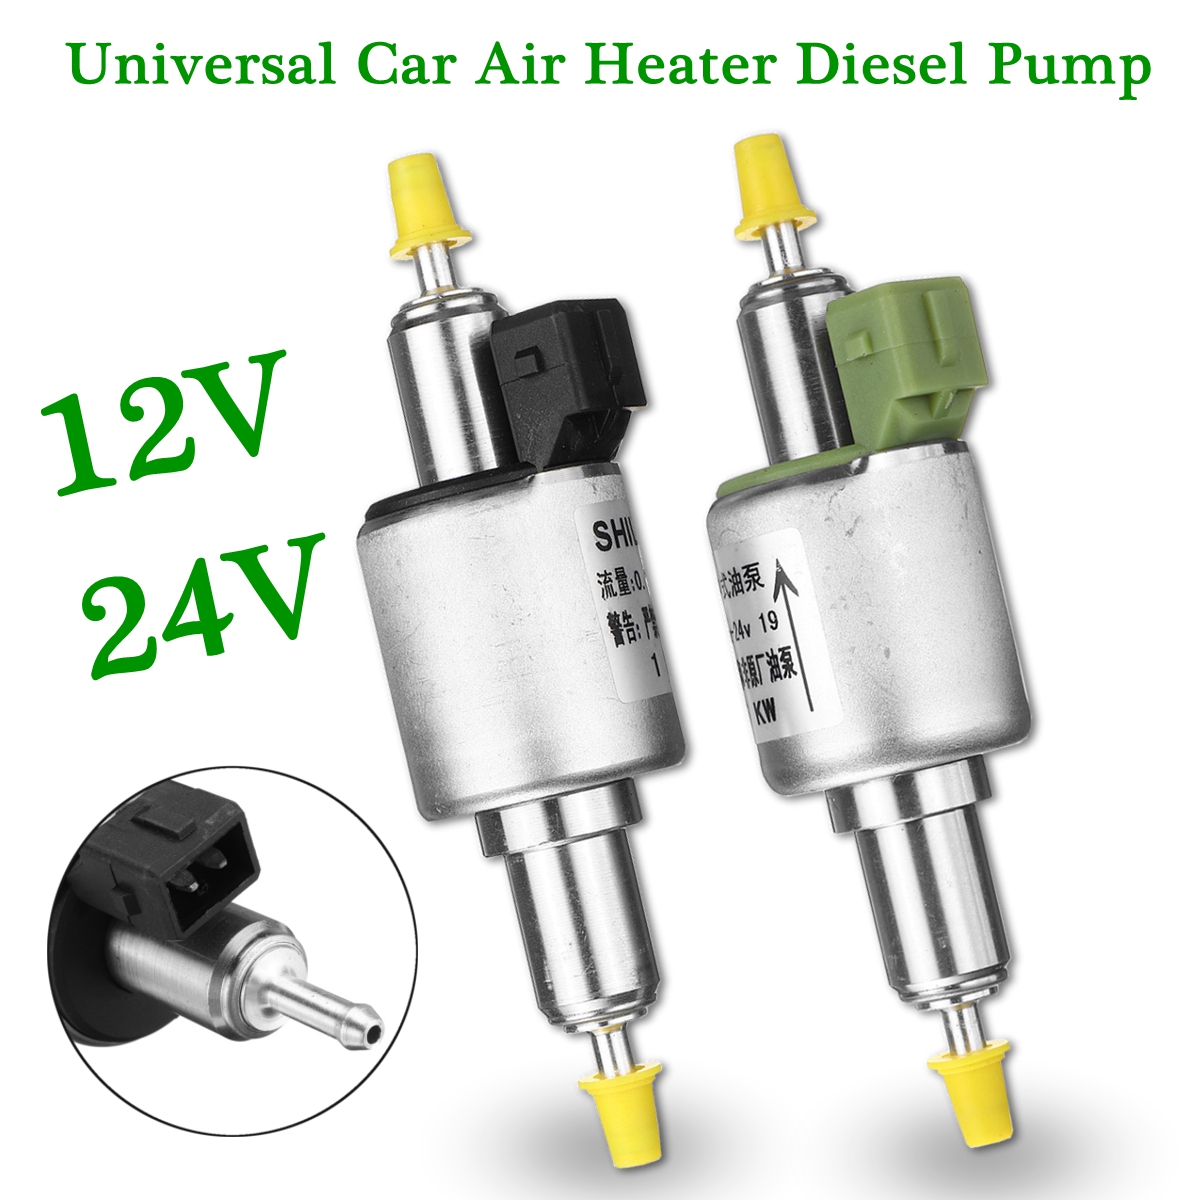 12V/24V Electric Oil Fuel Pump Universal Diesel Air Heater Pump